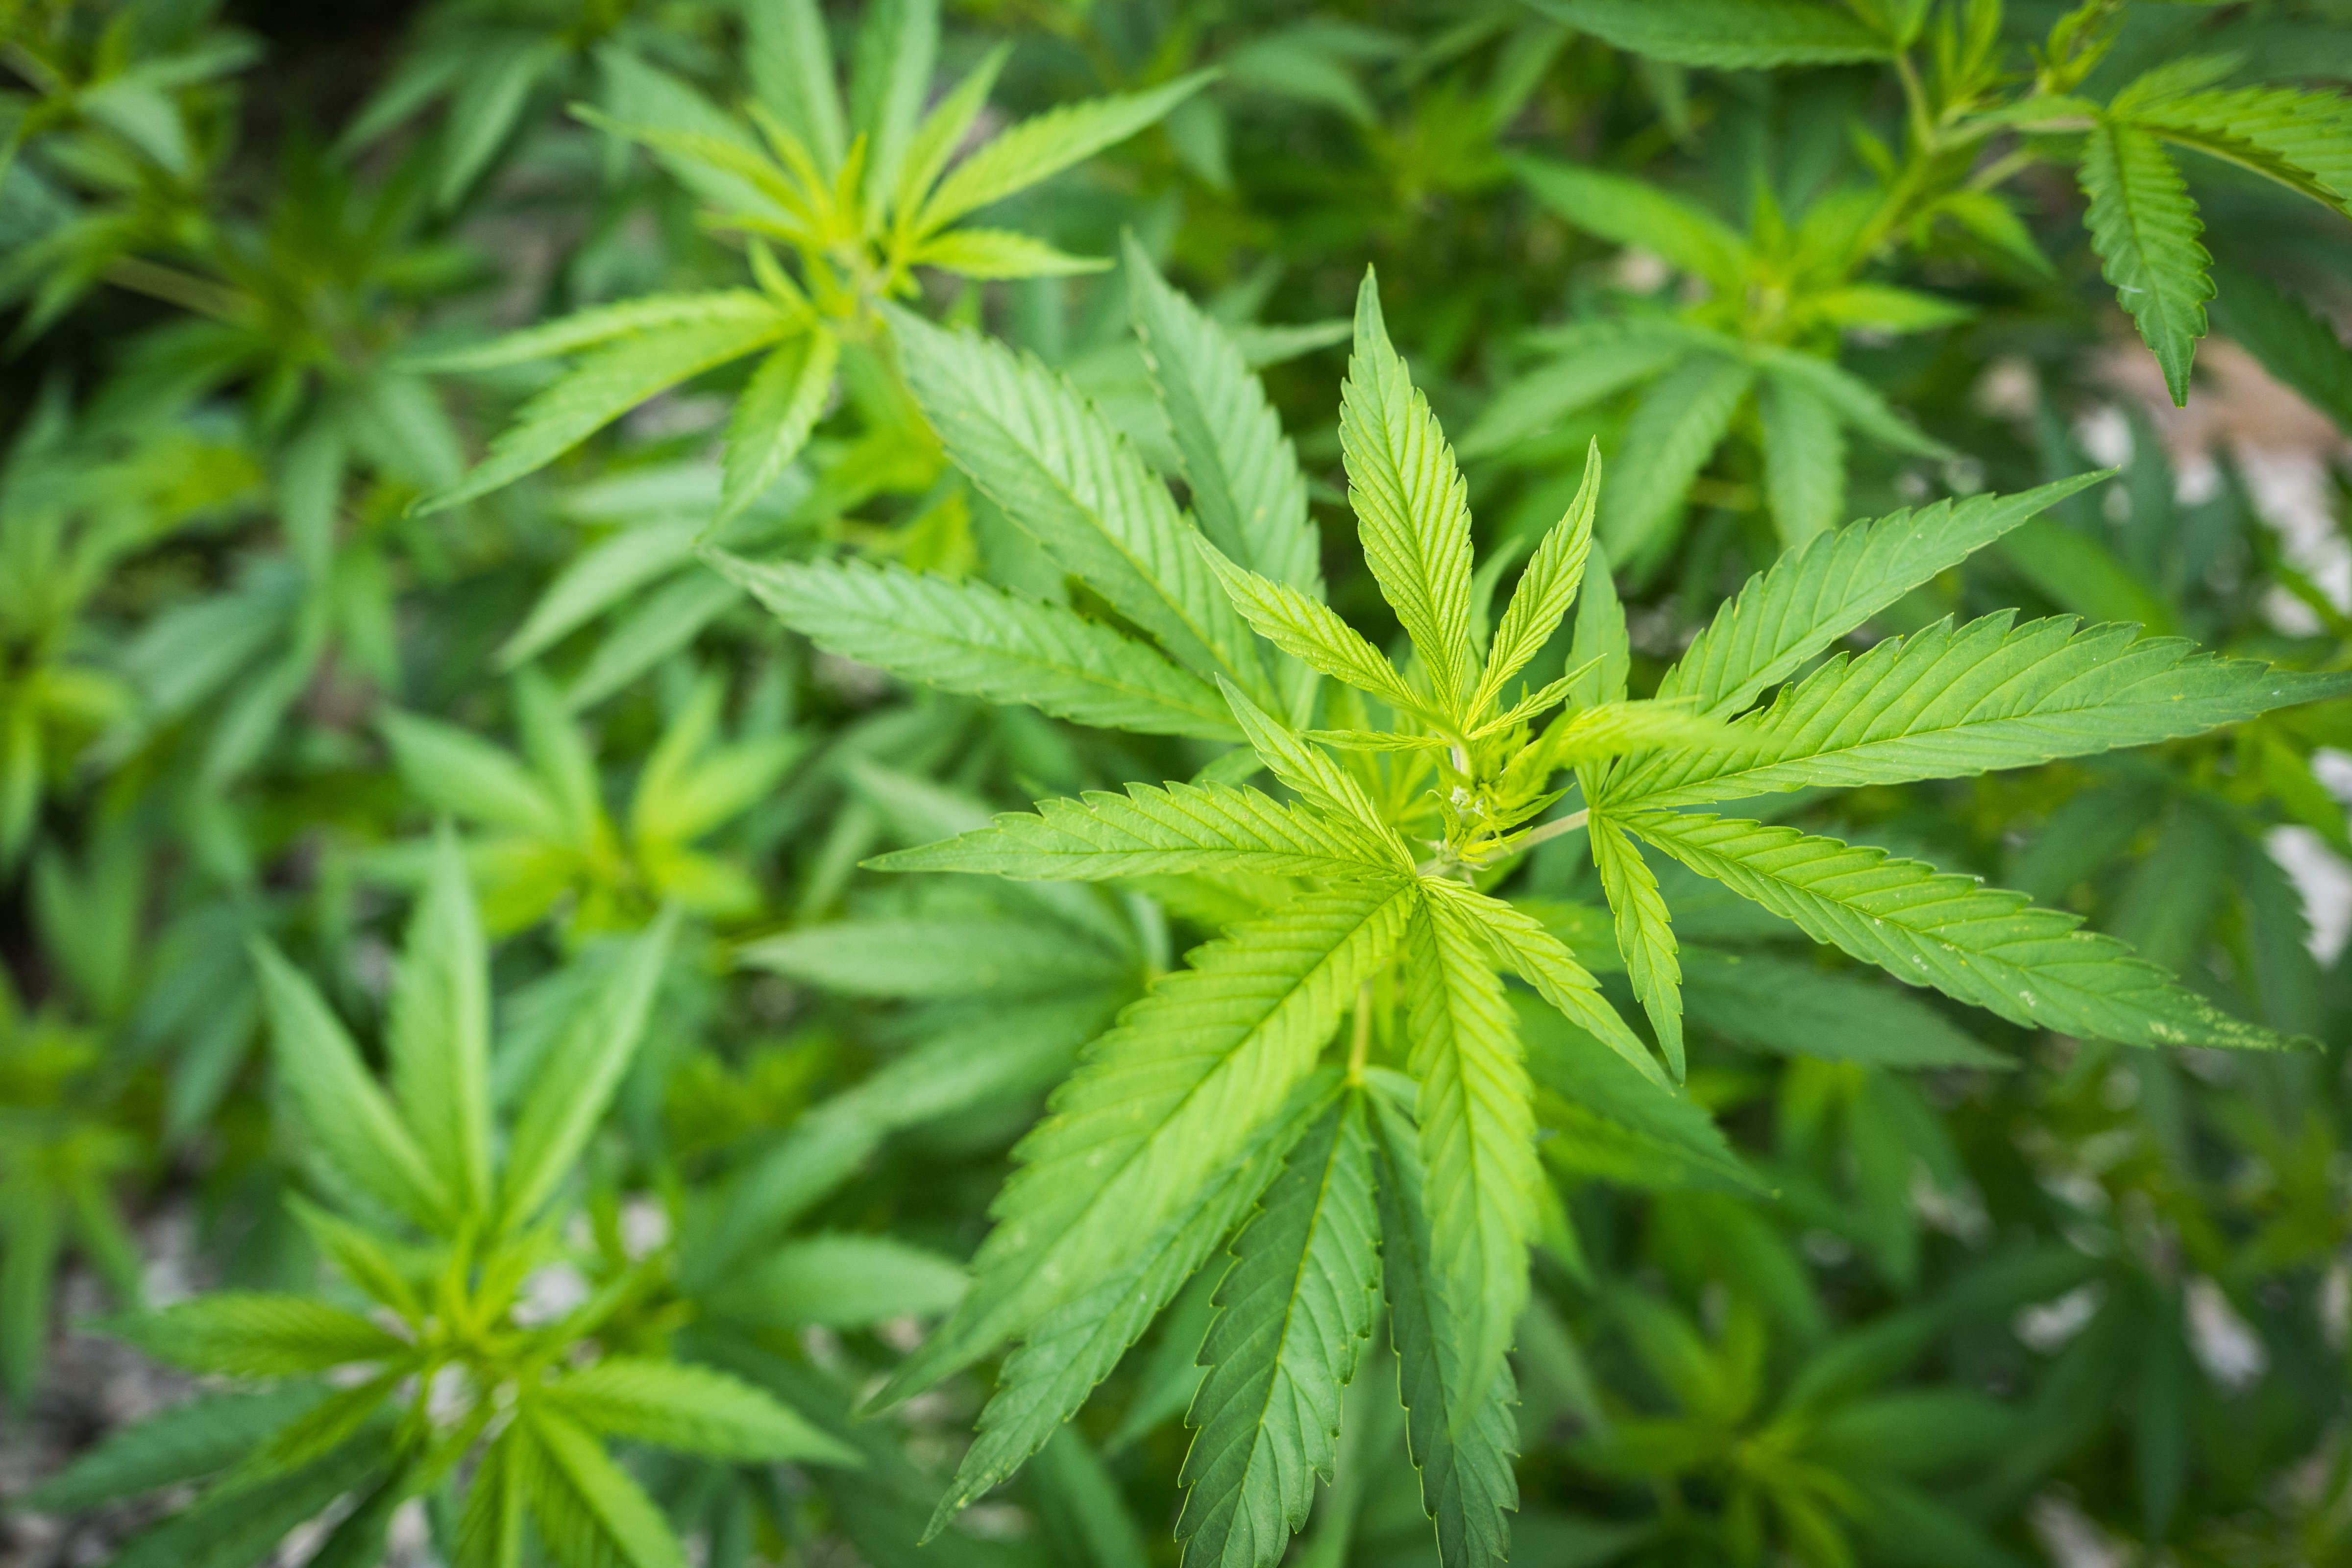 Stock photo of marijuana growing. (Eva-Foreman—Getty Images/iStockphoto)